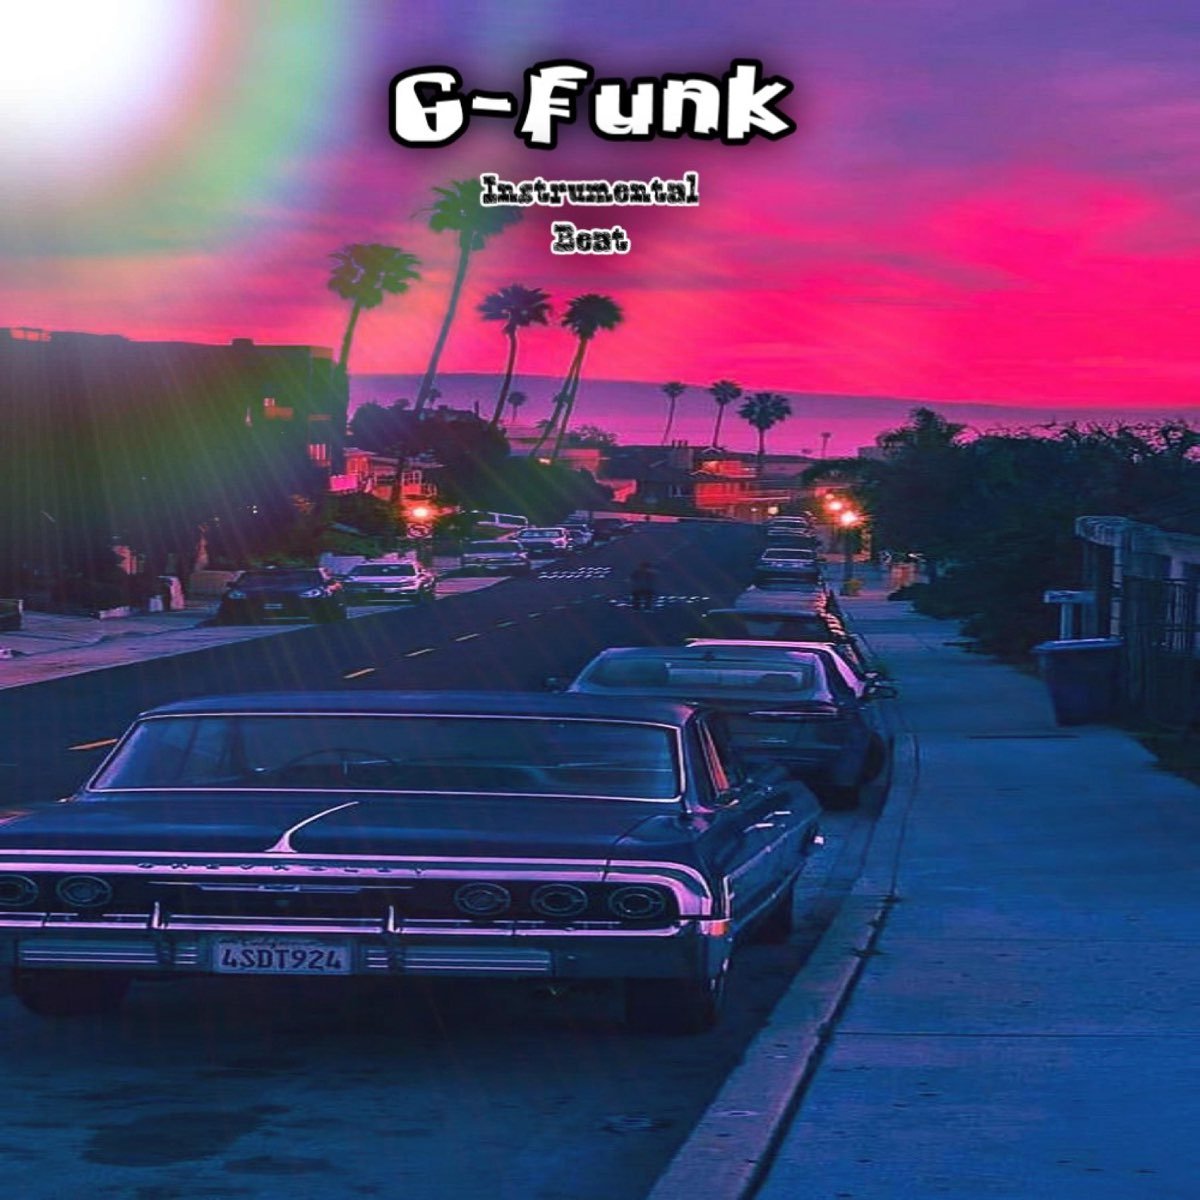 G Funk (Instrumentales Hip Hop) [Instrumental] by Dj Zir en el Beat